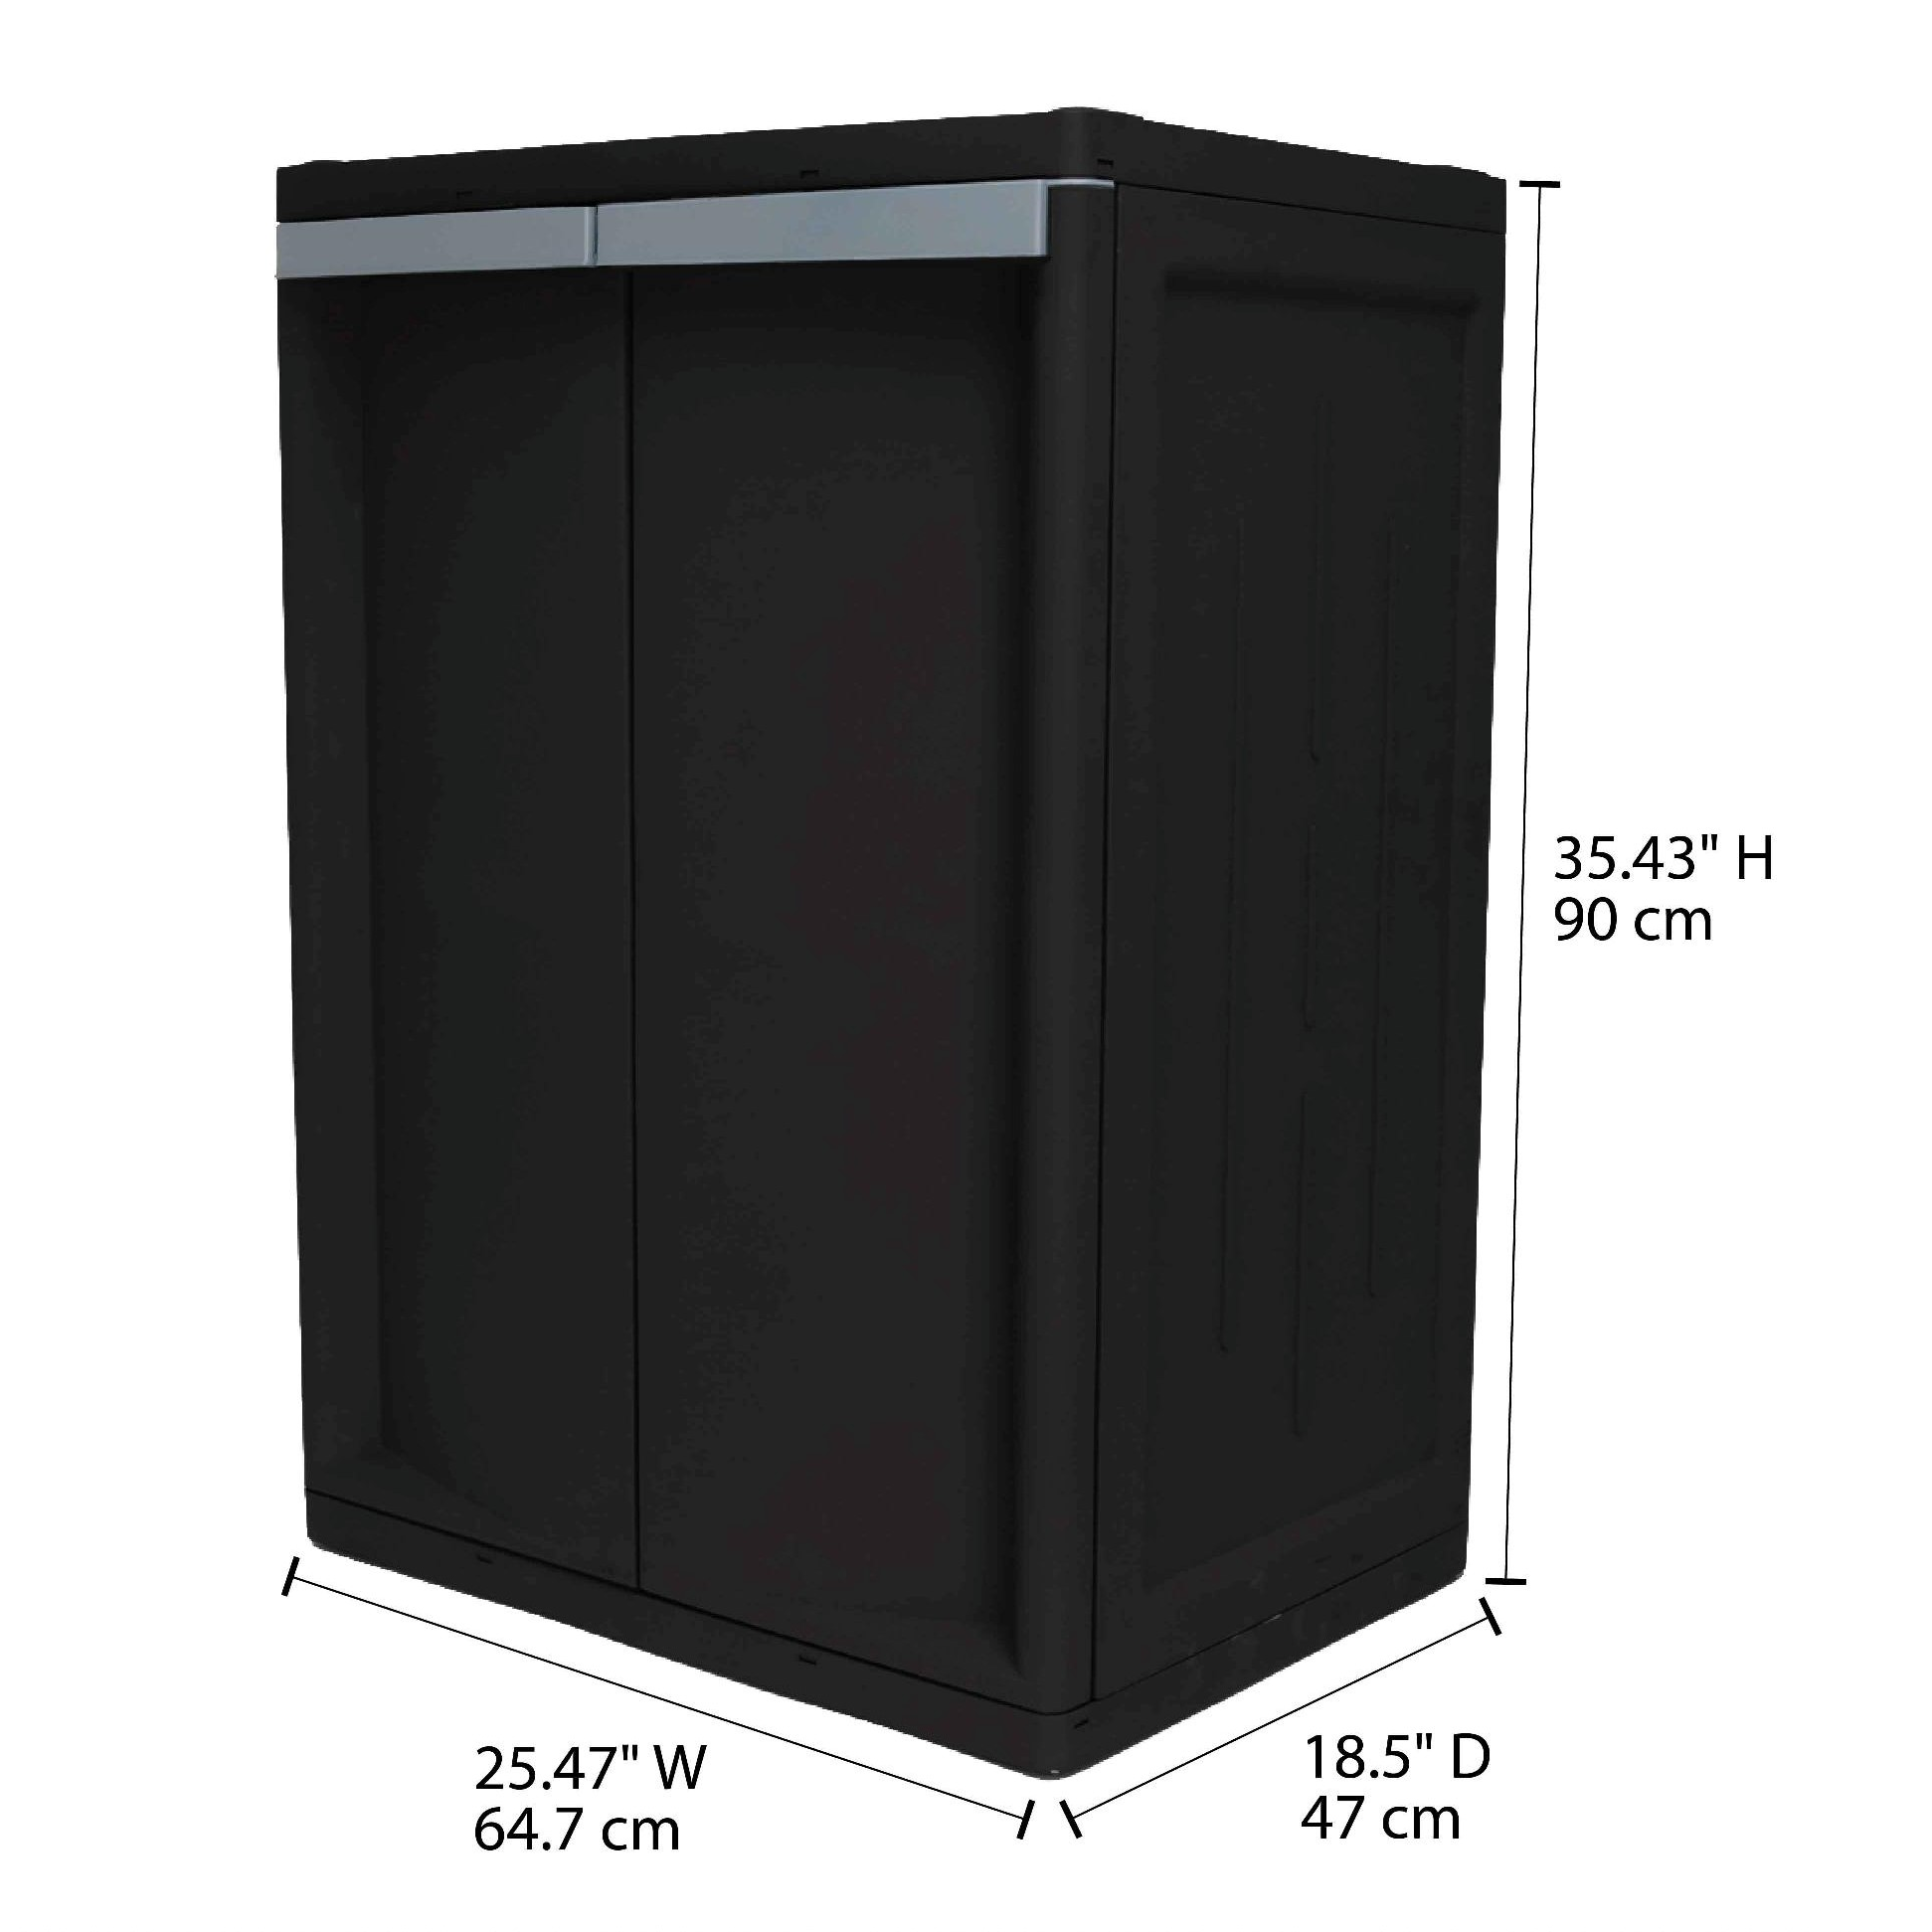 Hyper Tough 2 Shelf Plastic Garage Storage Cabinet 18.5Dx25.47Wx35.43"H, Black - image 3 of 9